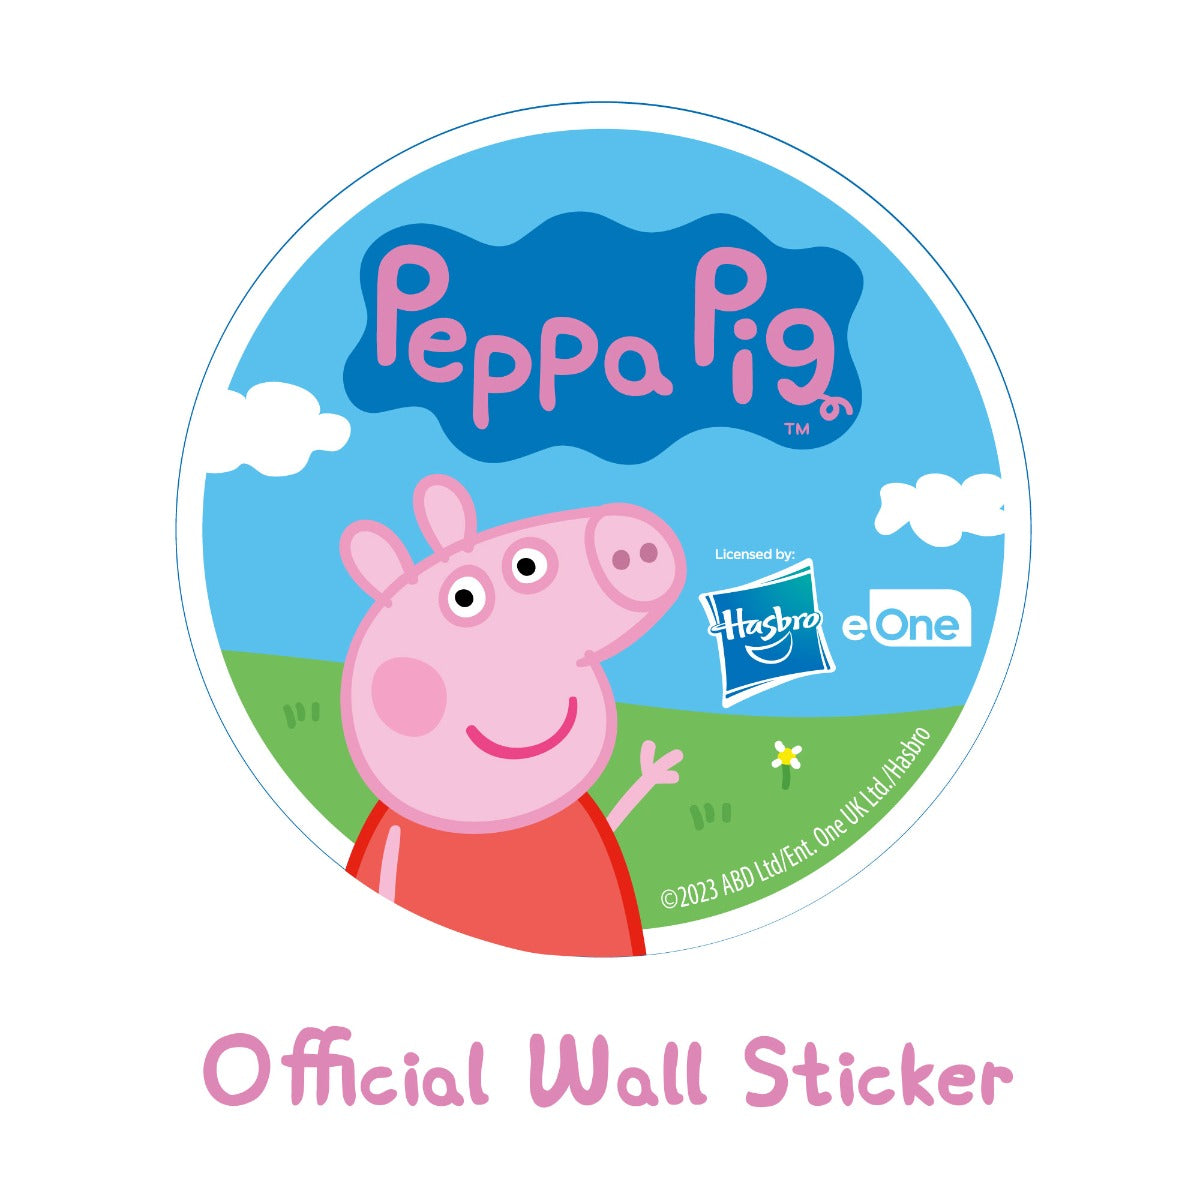 Peppa Pig Wall Sticker - Peppa and Friends Walking in Line